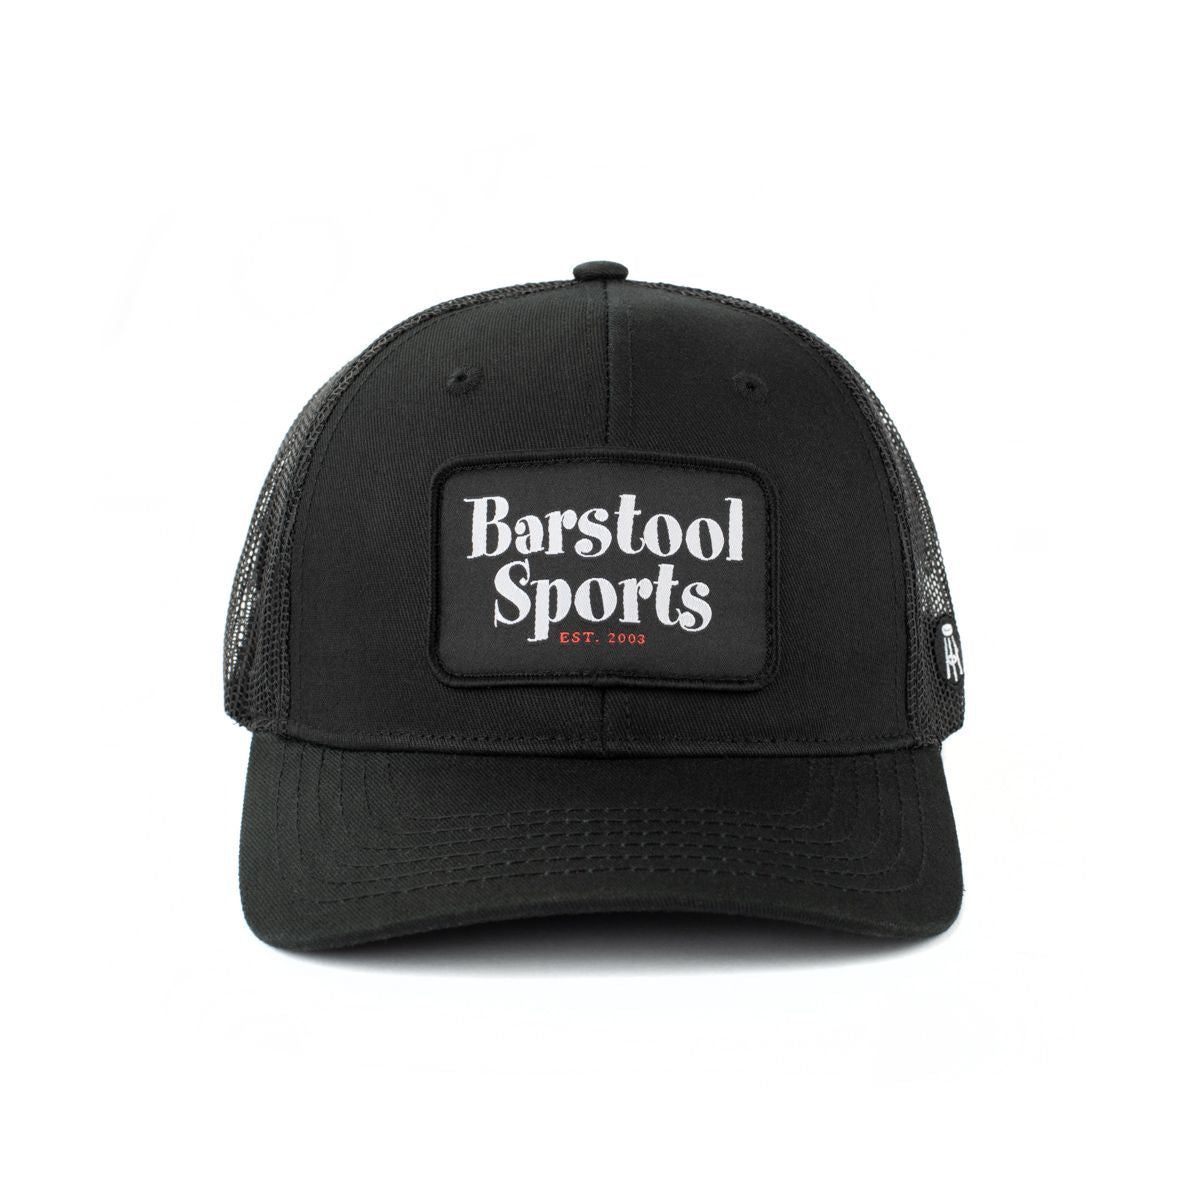 Barstool Sports Common Man Trucker Hat-Hats-Barstool Sports-Black-One Size-Barstool Sports